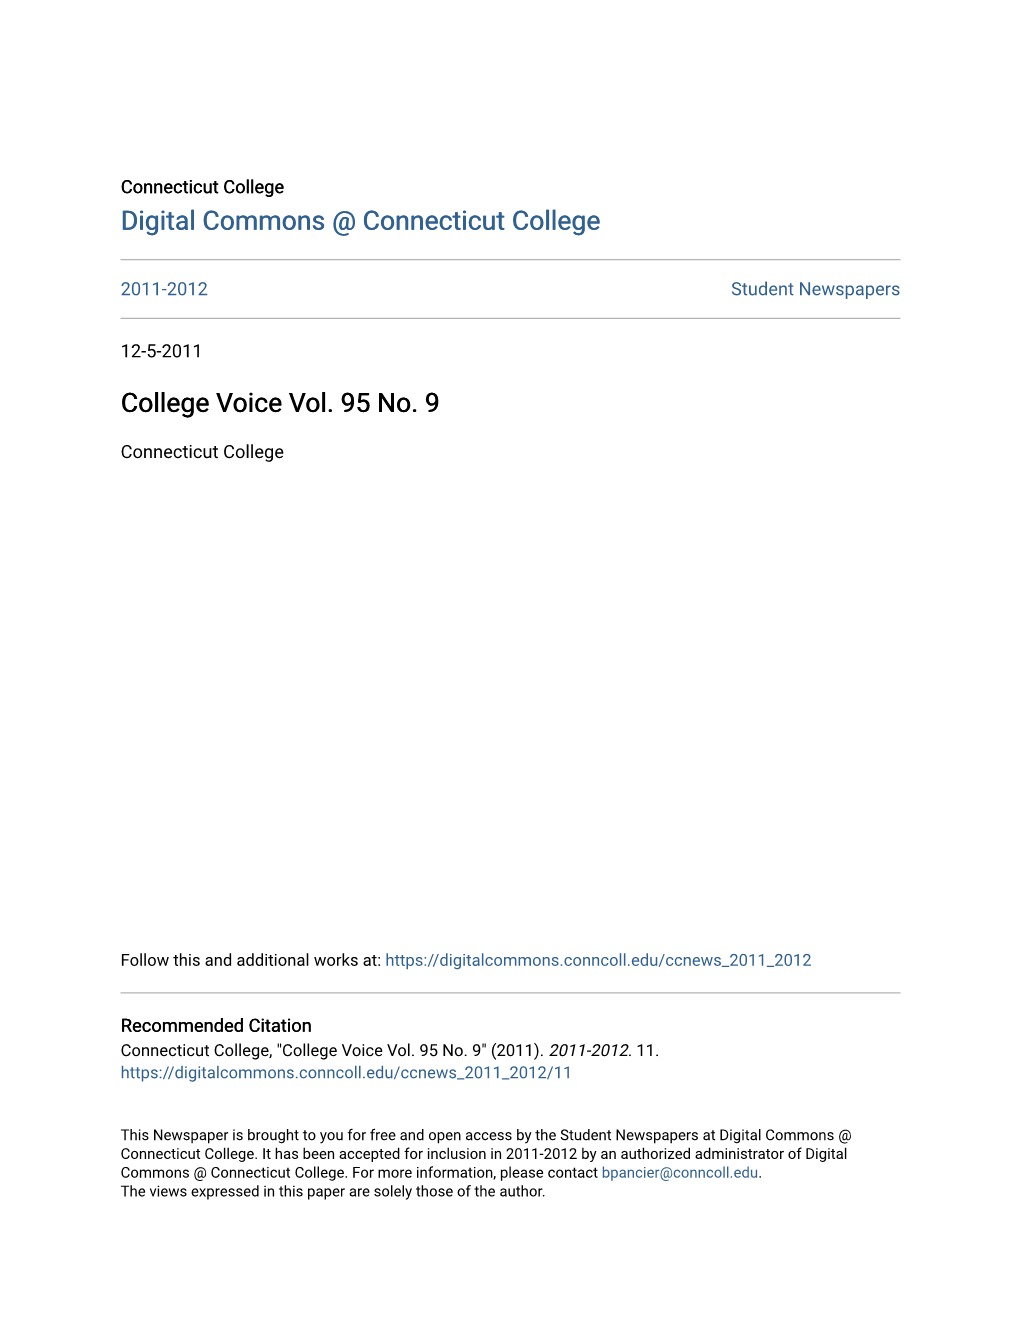 College Voice Vol. 95 No. 9